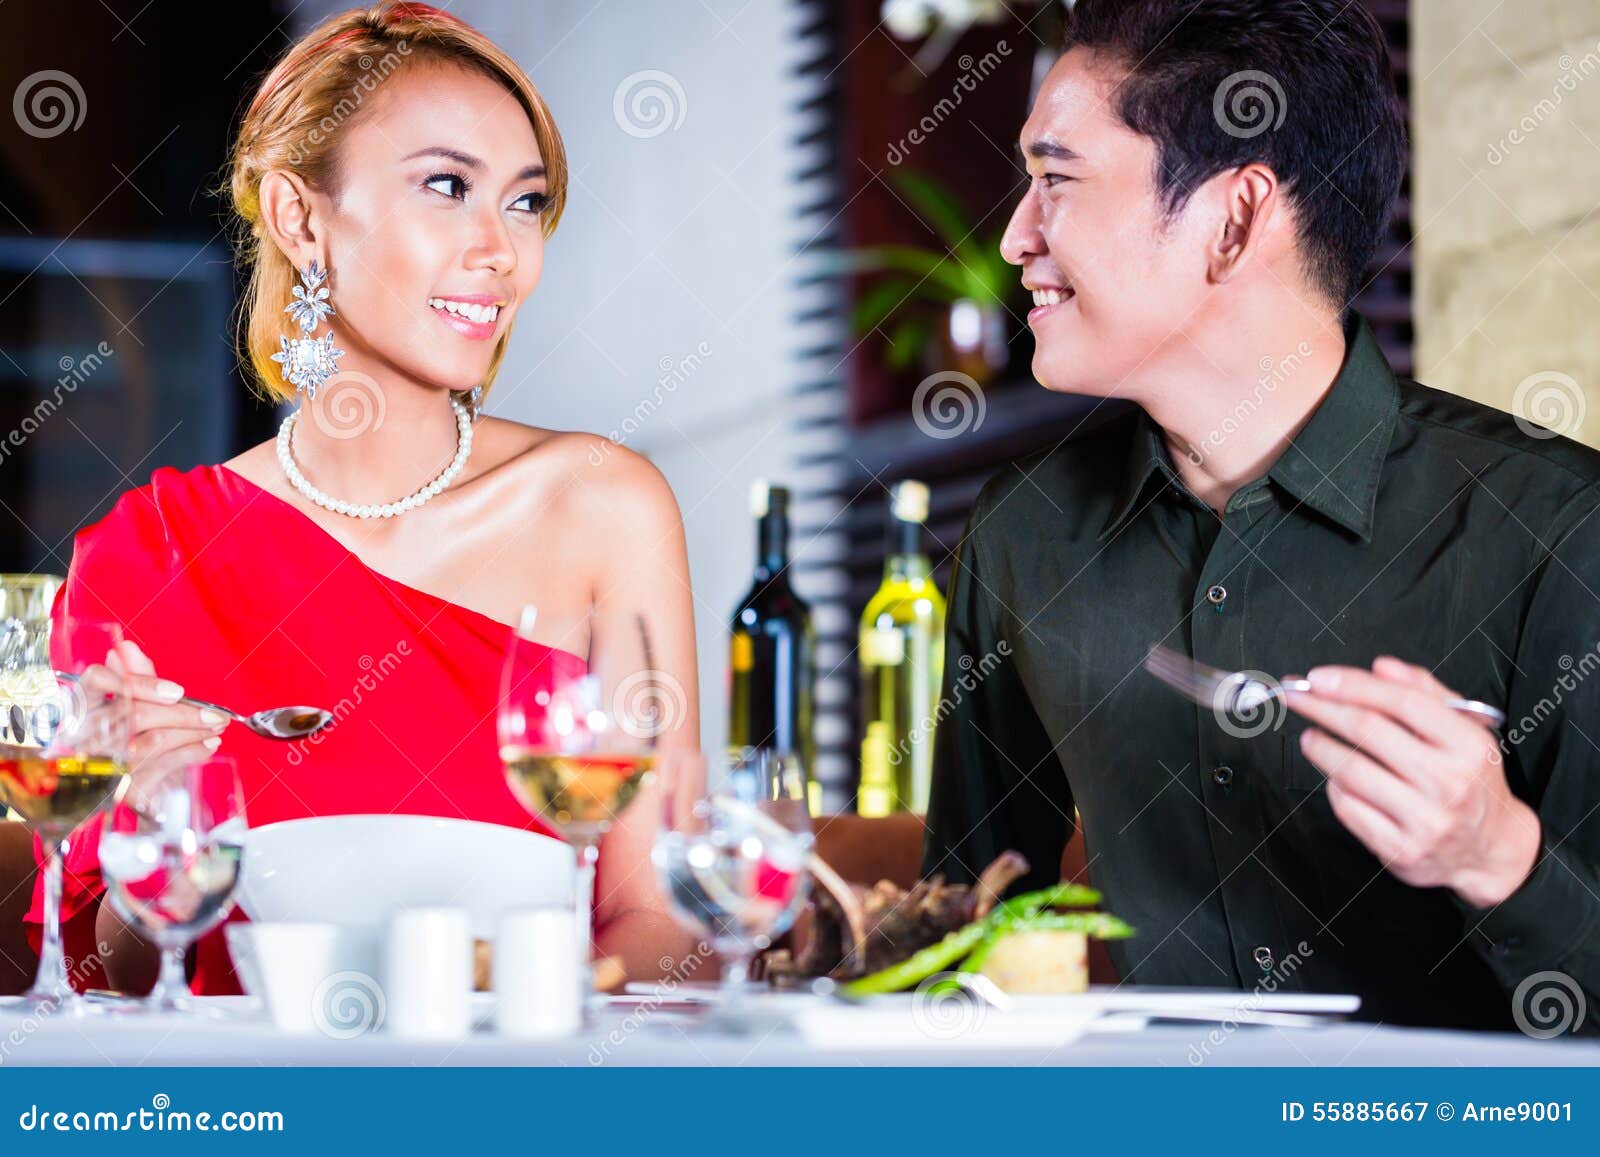 couple fine dining in fancy restaurant